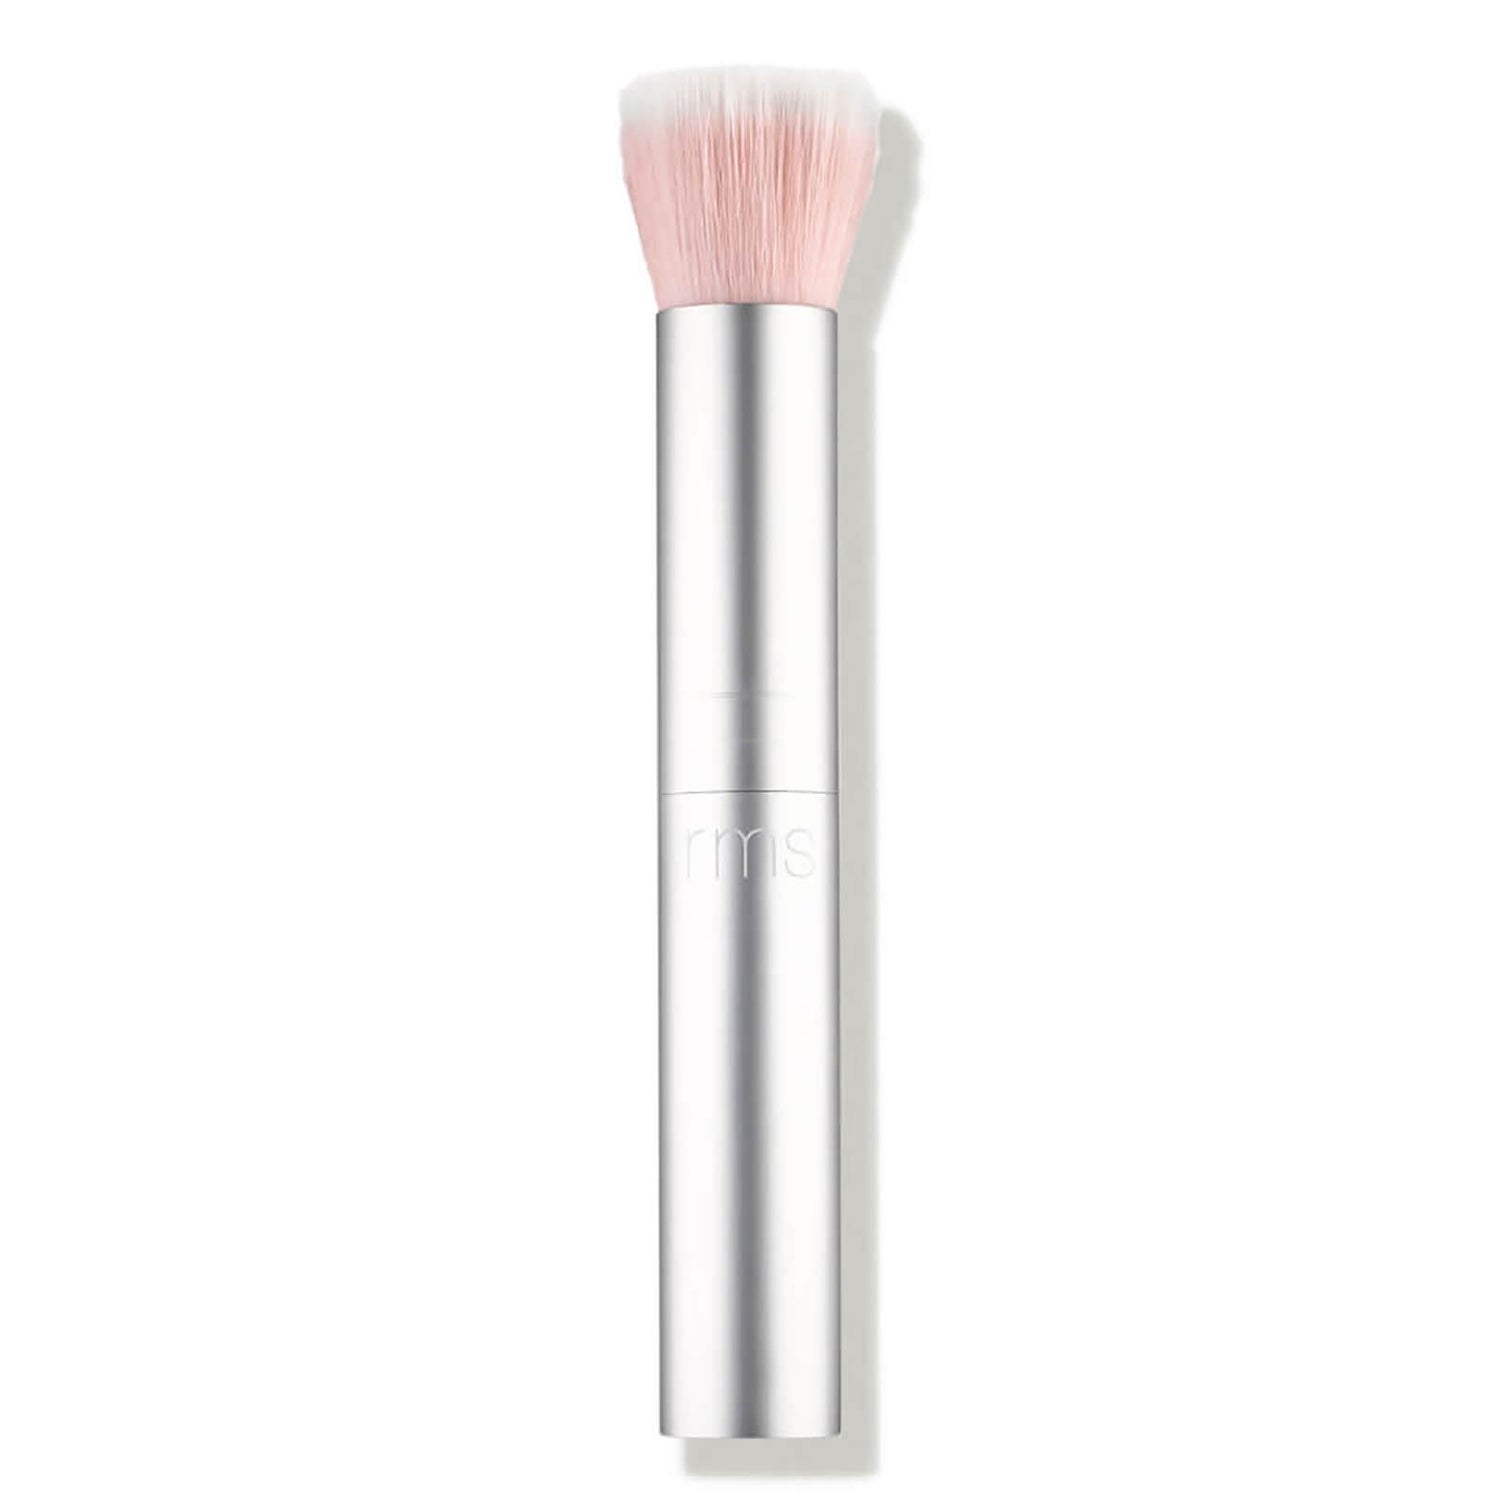 RMS Beauty Skin2Skin Blush Brush (1 piece)